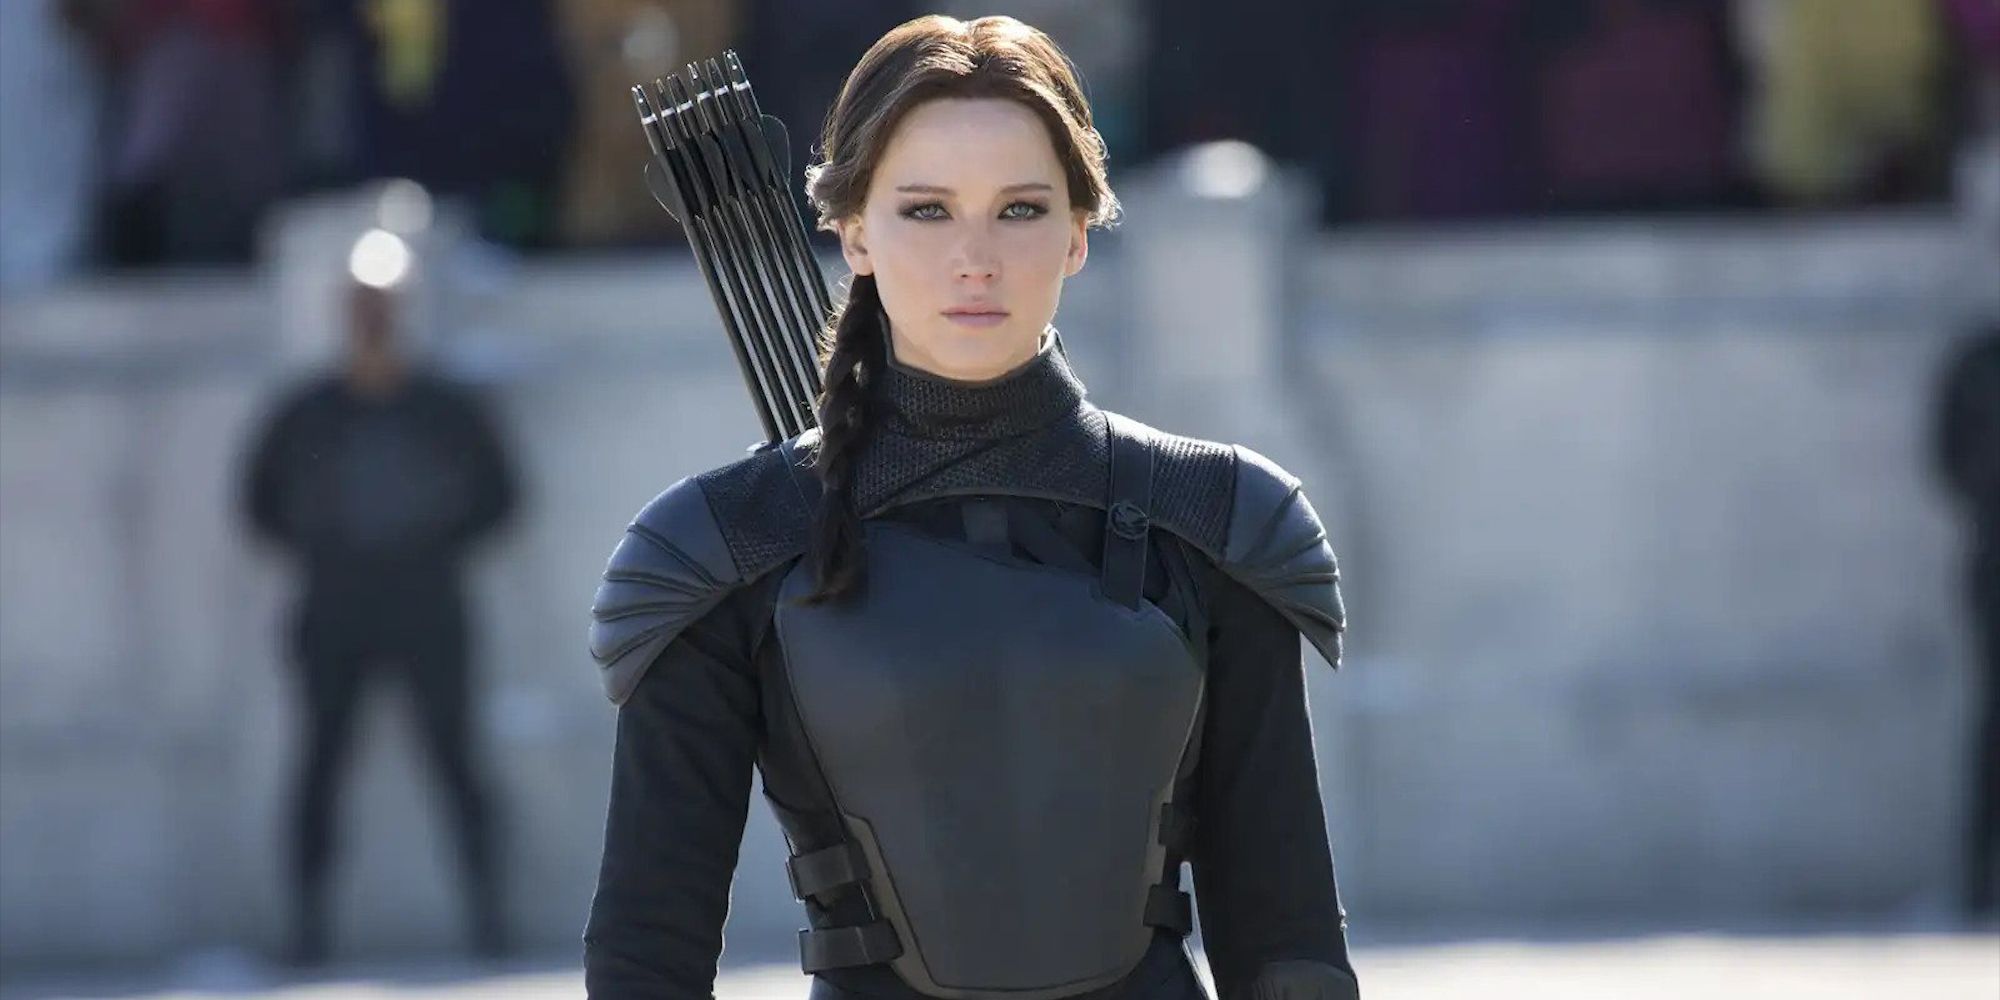 Jennifer Lawrence as Katniss Everdeen in The Hunger Games: Mockingjay Part 2